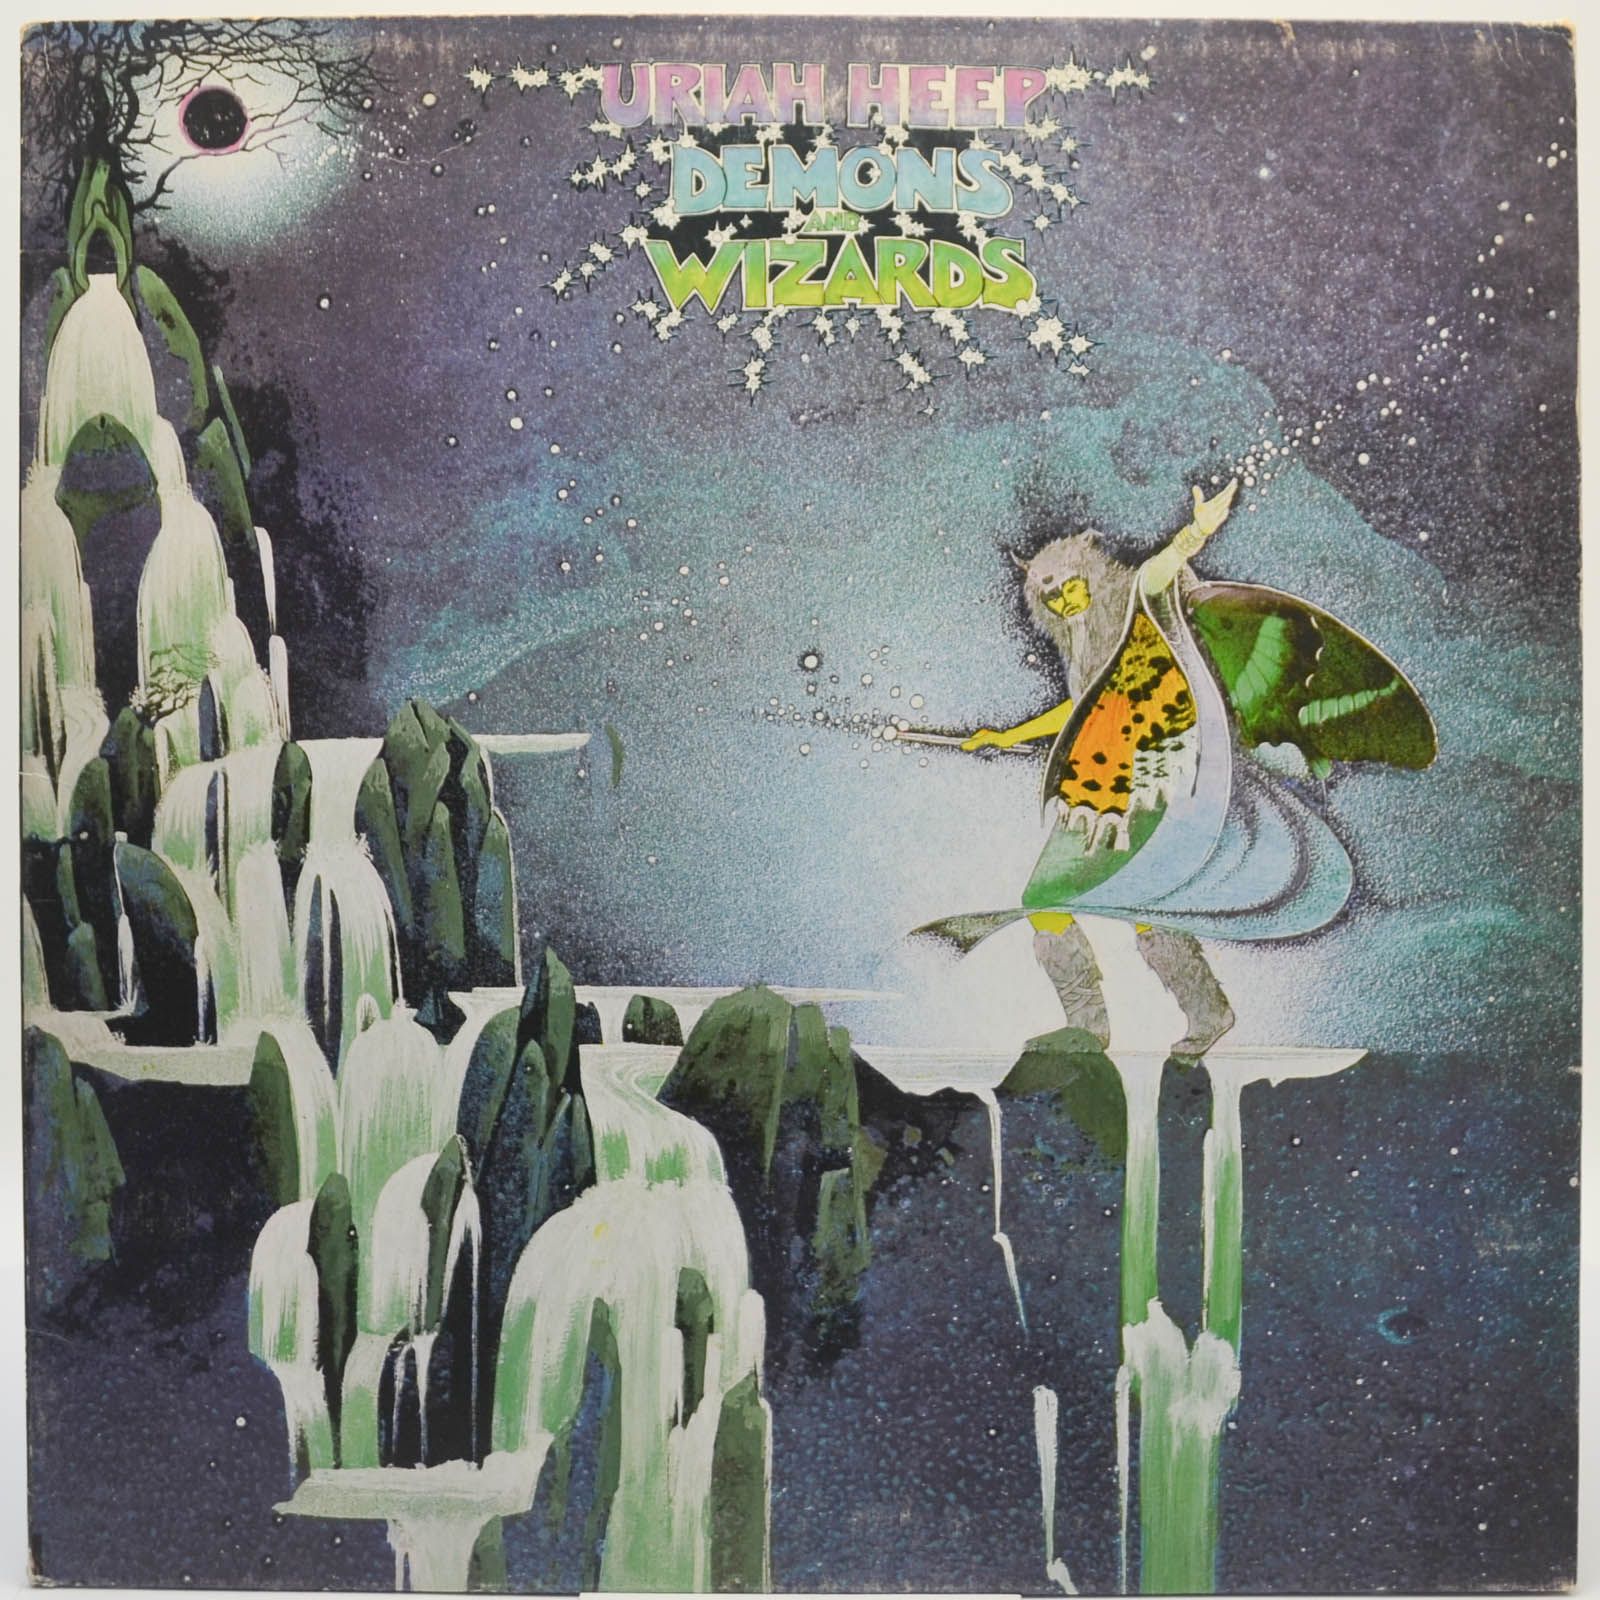 Uriah Heep — Demons And Wizards, 1972